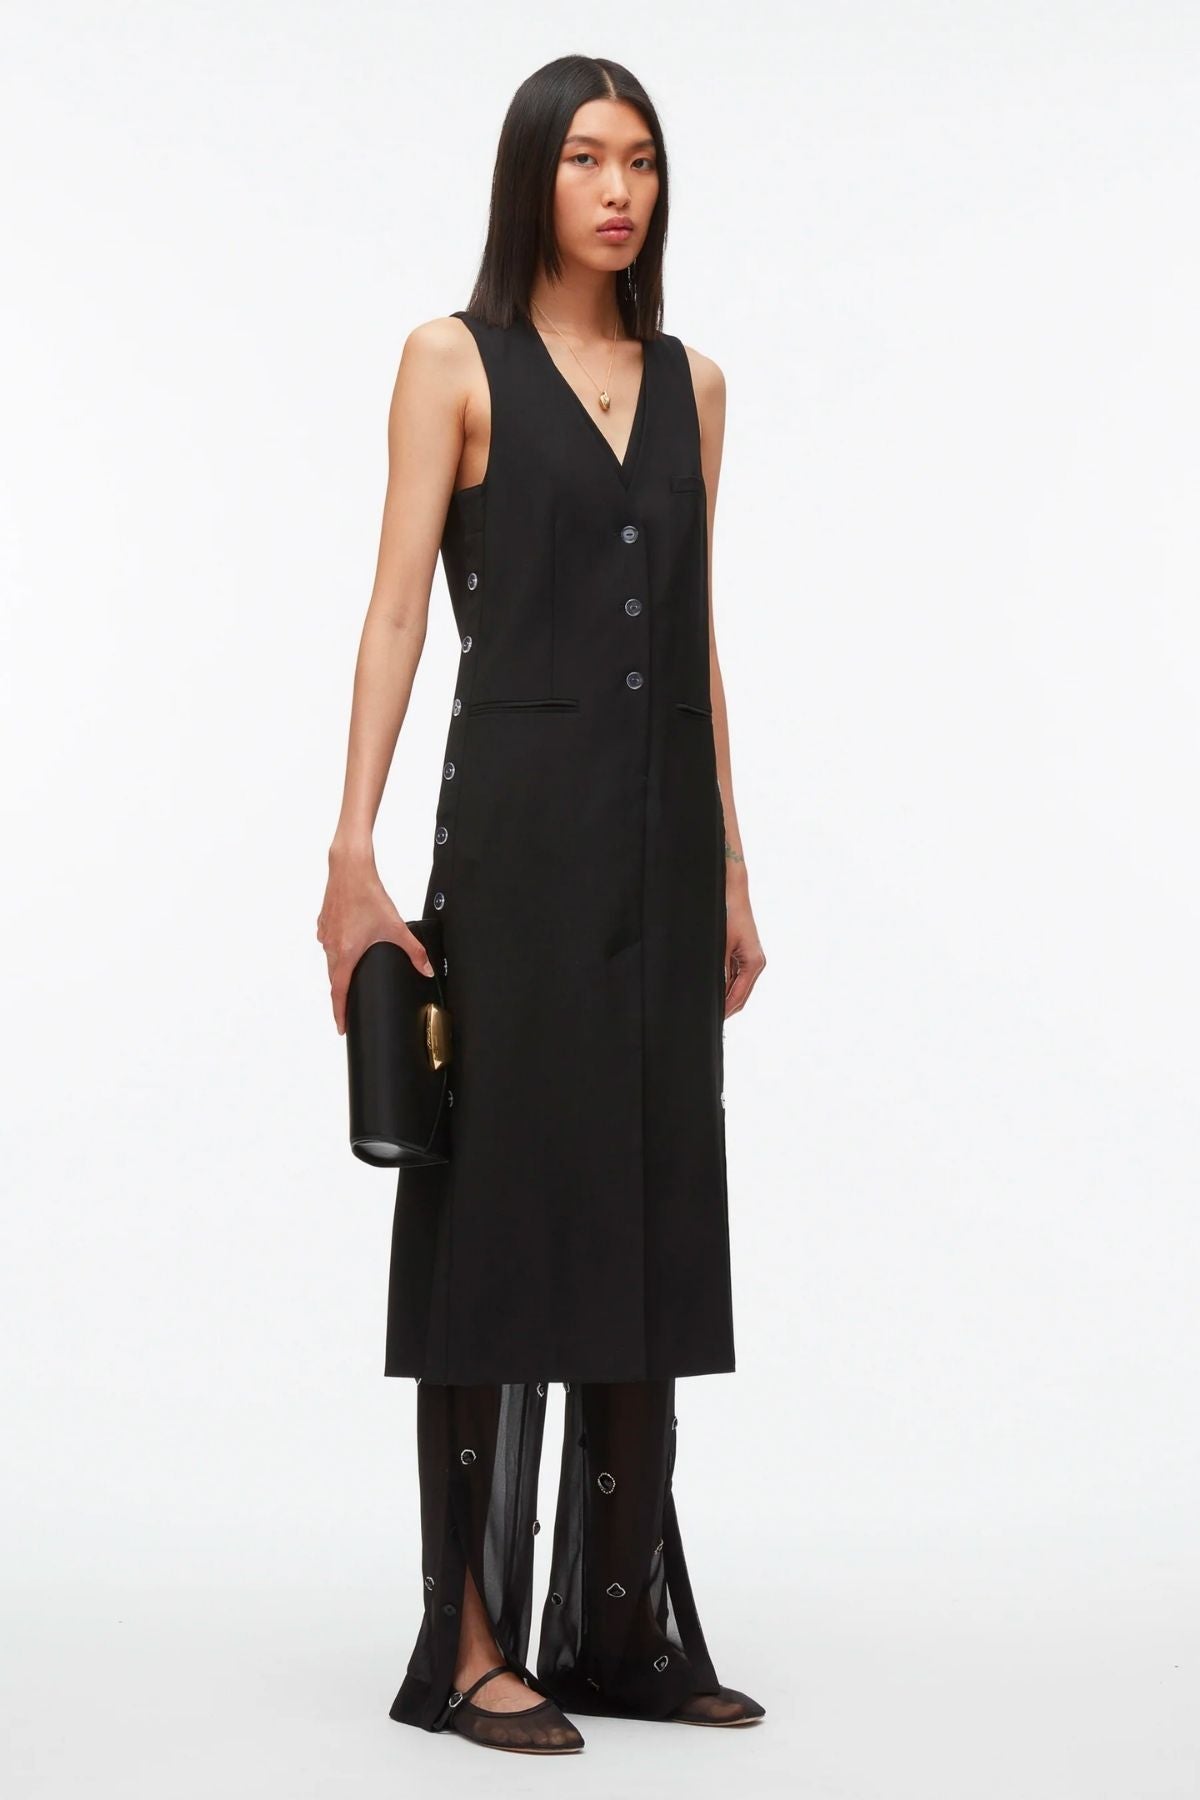 3.1 Phillip Lim Tailored Vest Dress with Set In Bra - Black